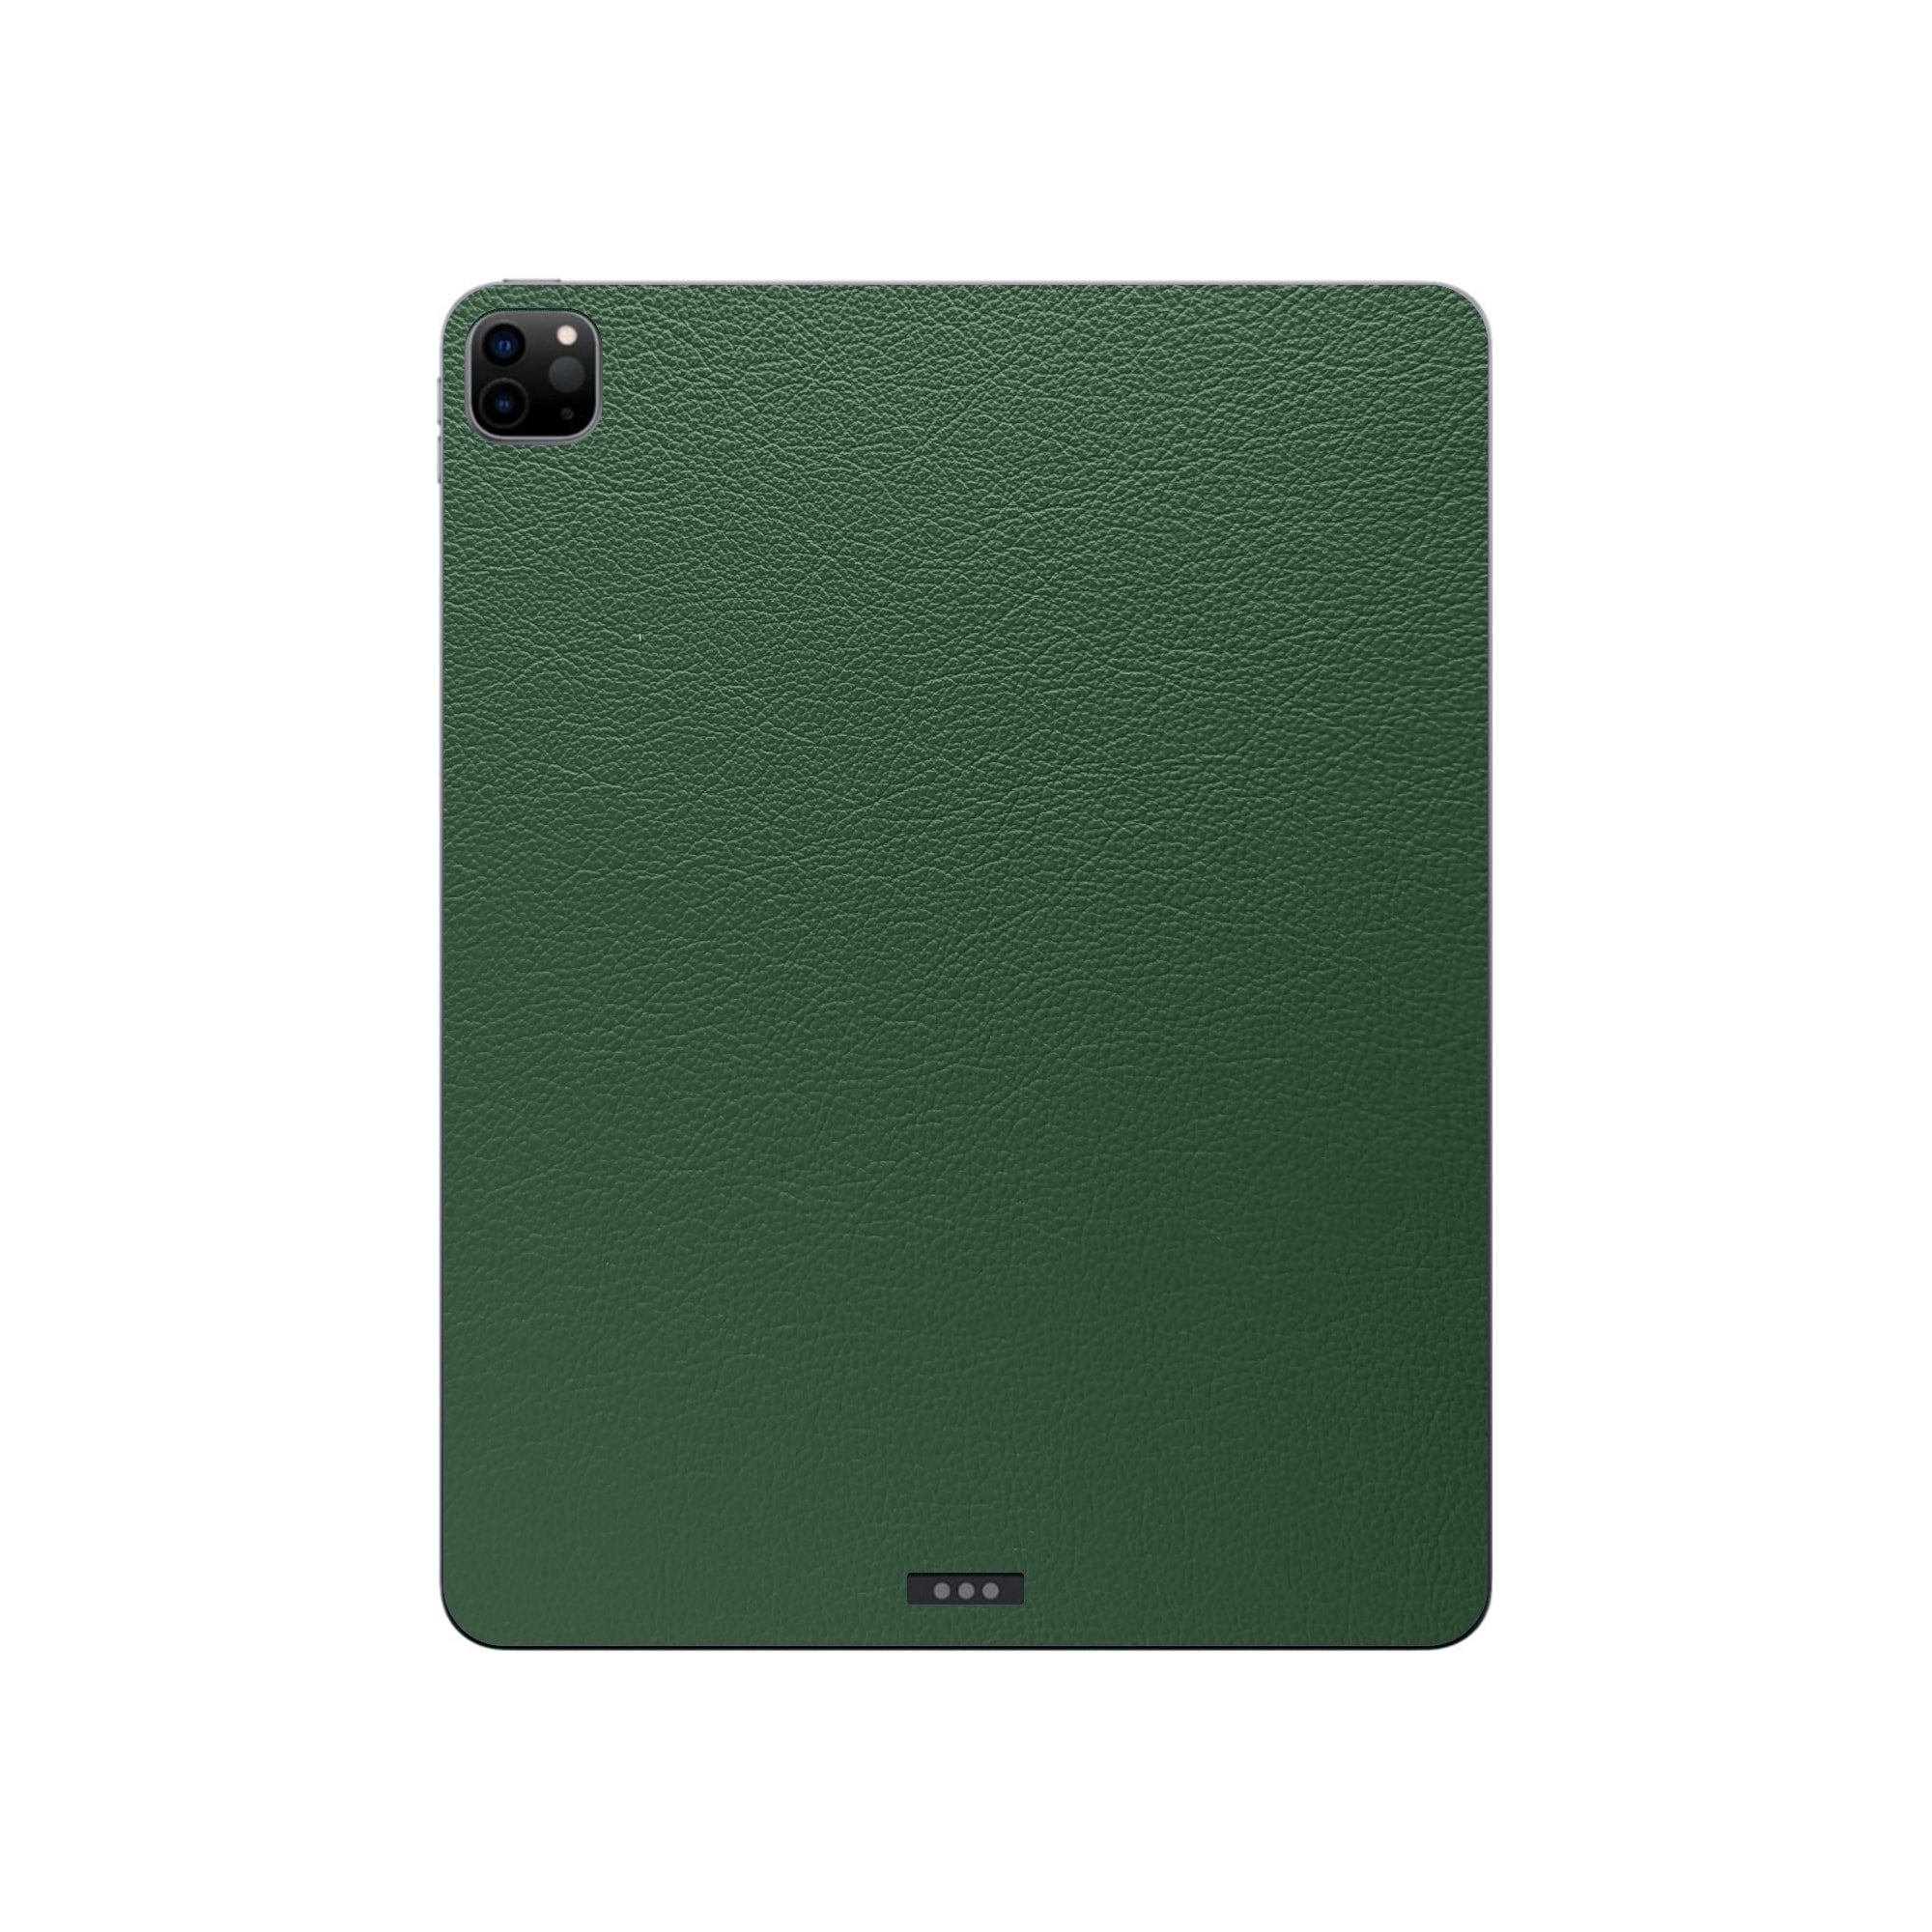 alt: iPad Leather Skin | var:forest-green